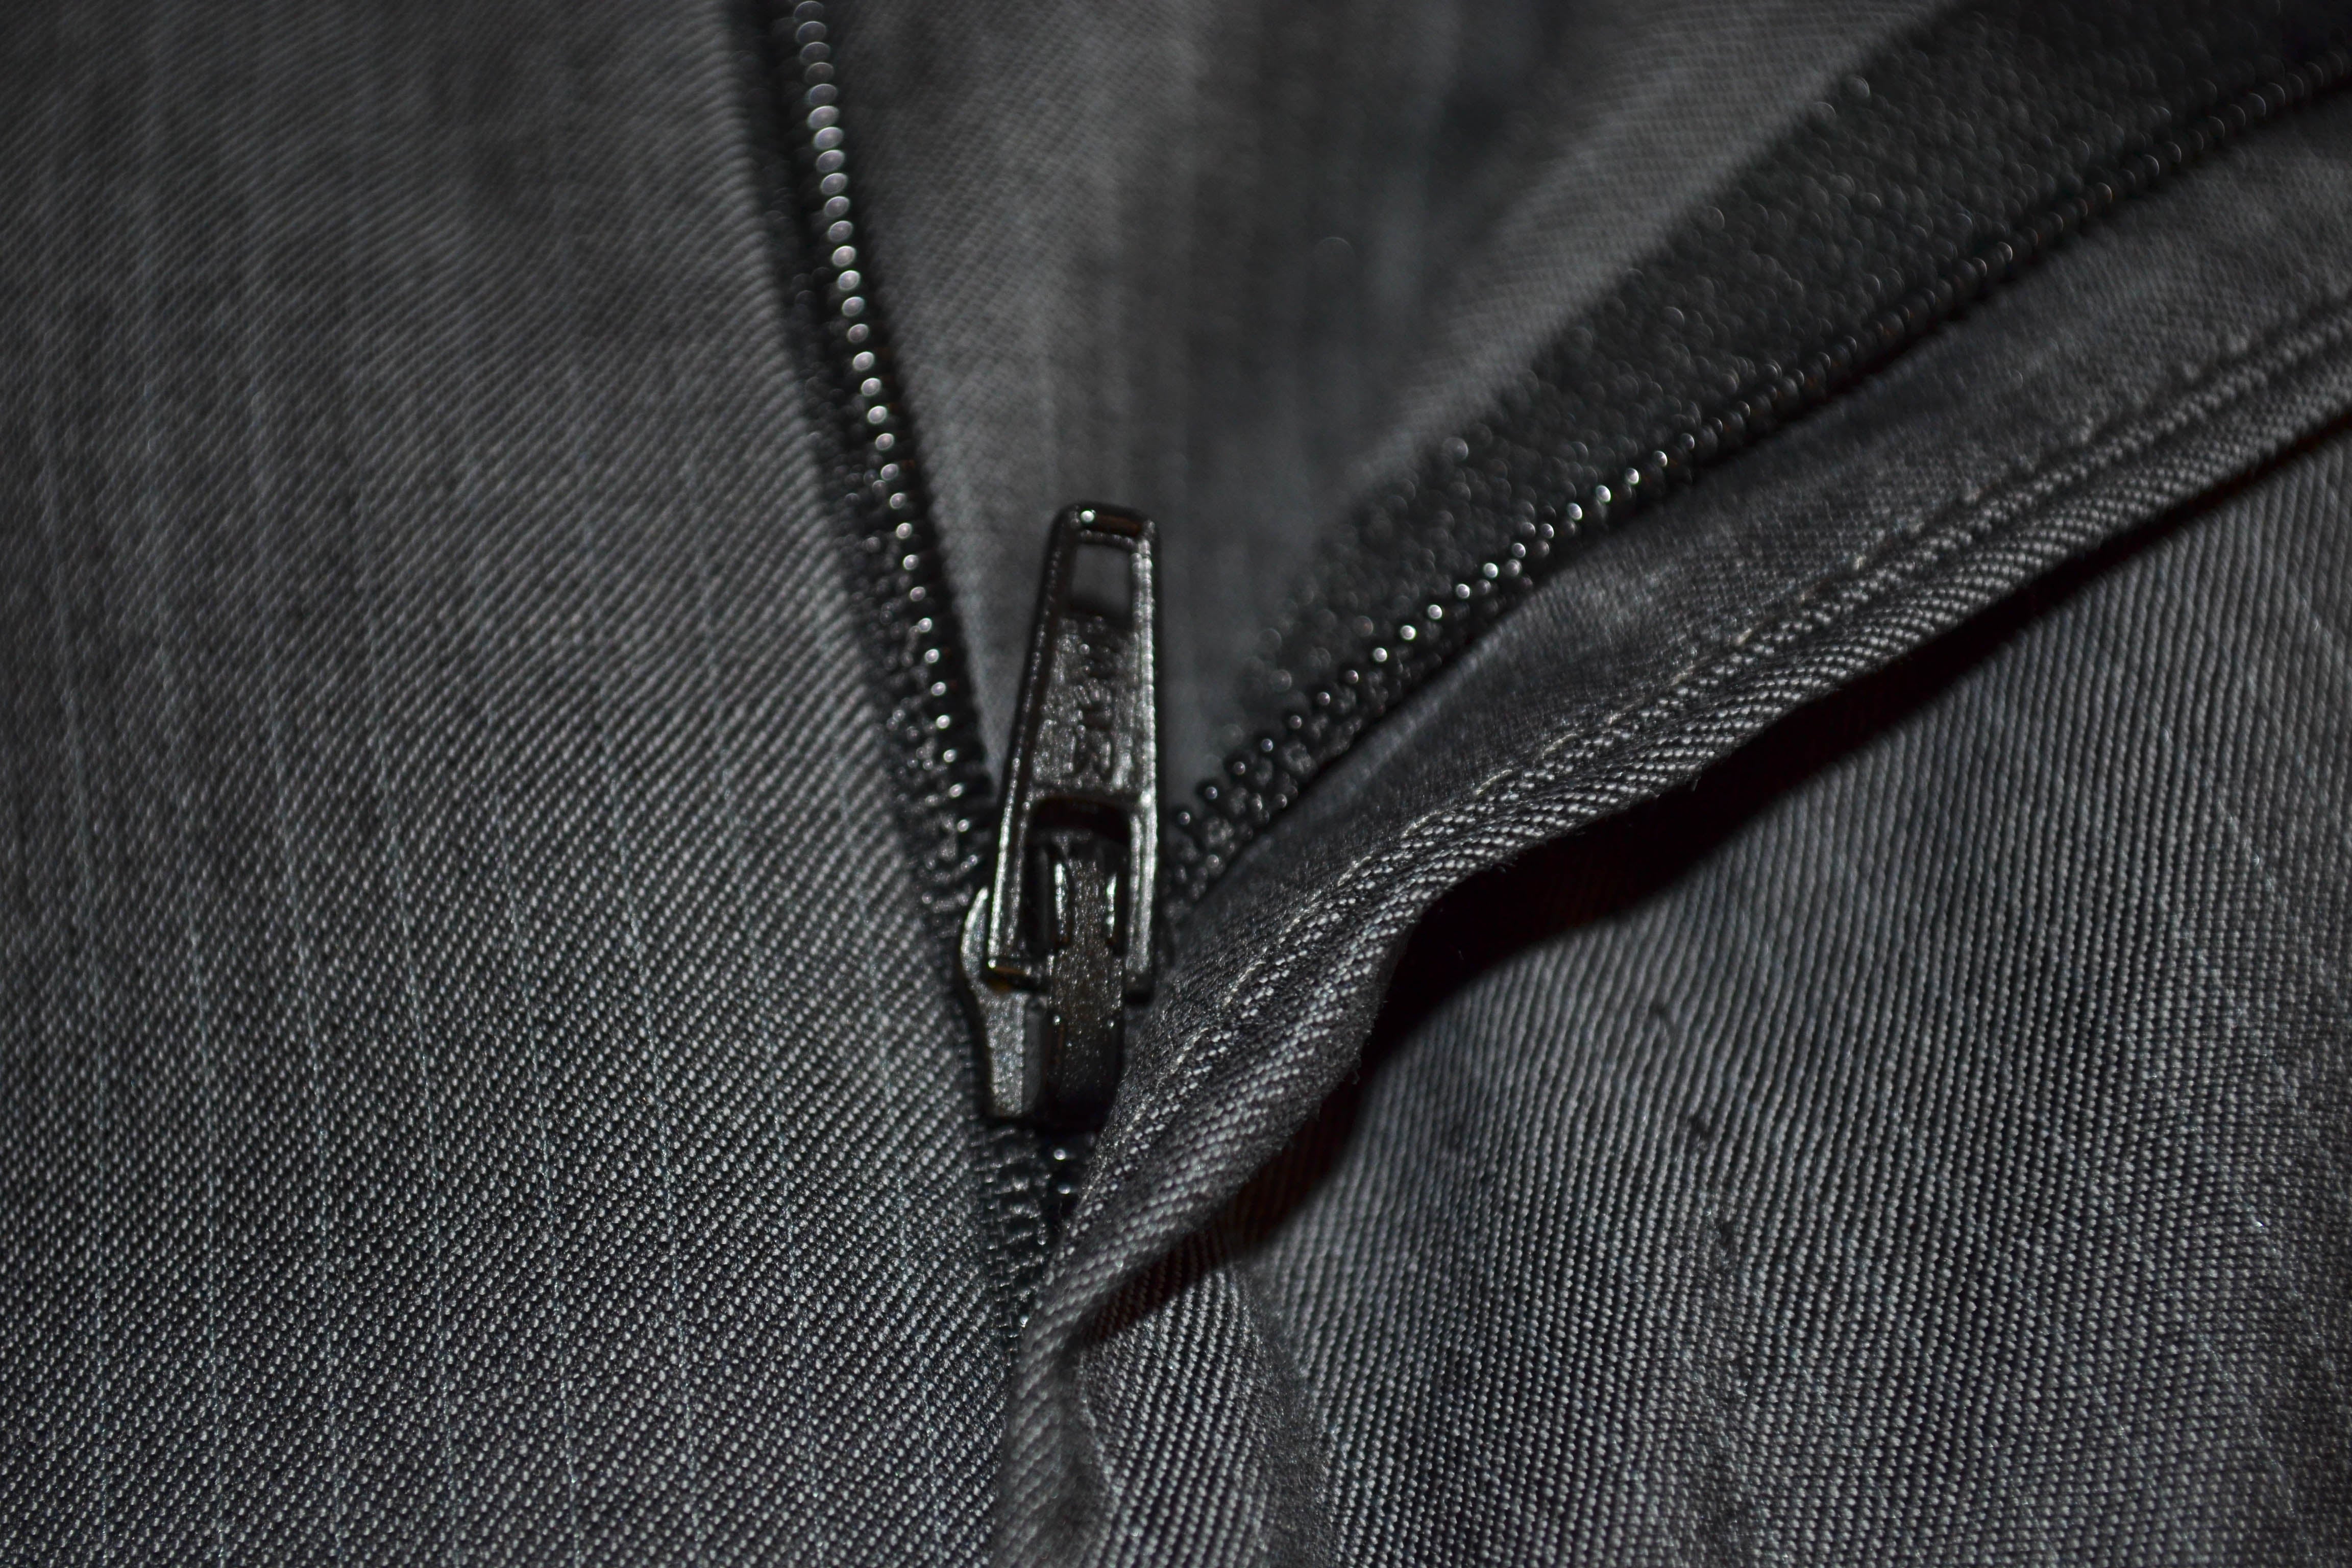 LOUIS VUITTON Grey Denim Button Up Jacket *LV Monogram LOGO* 52 -MINT  preowned